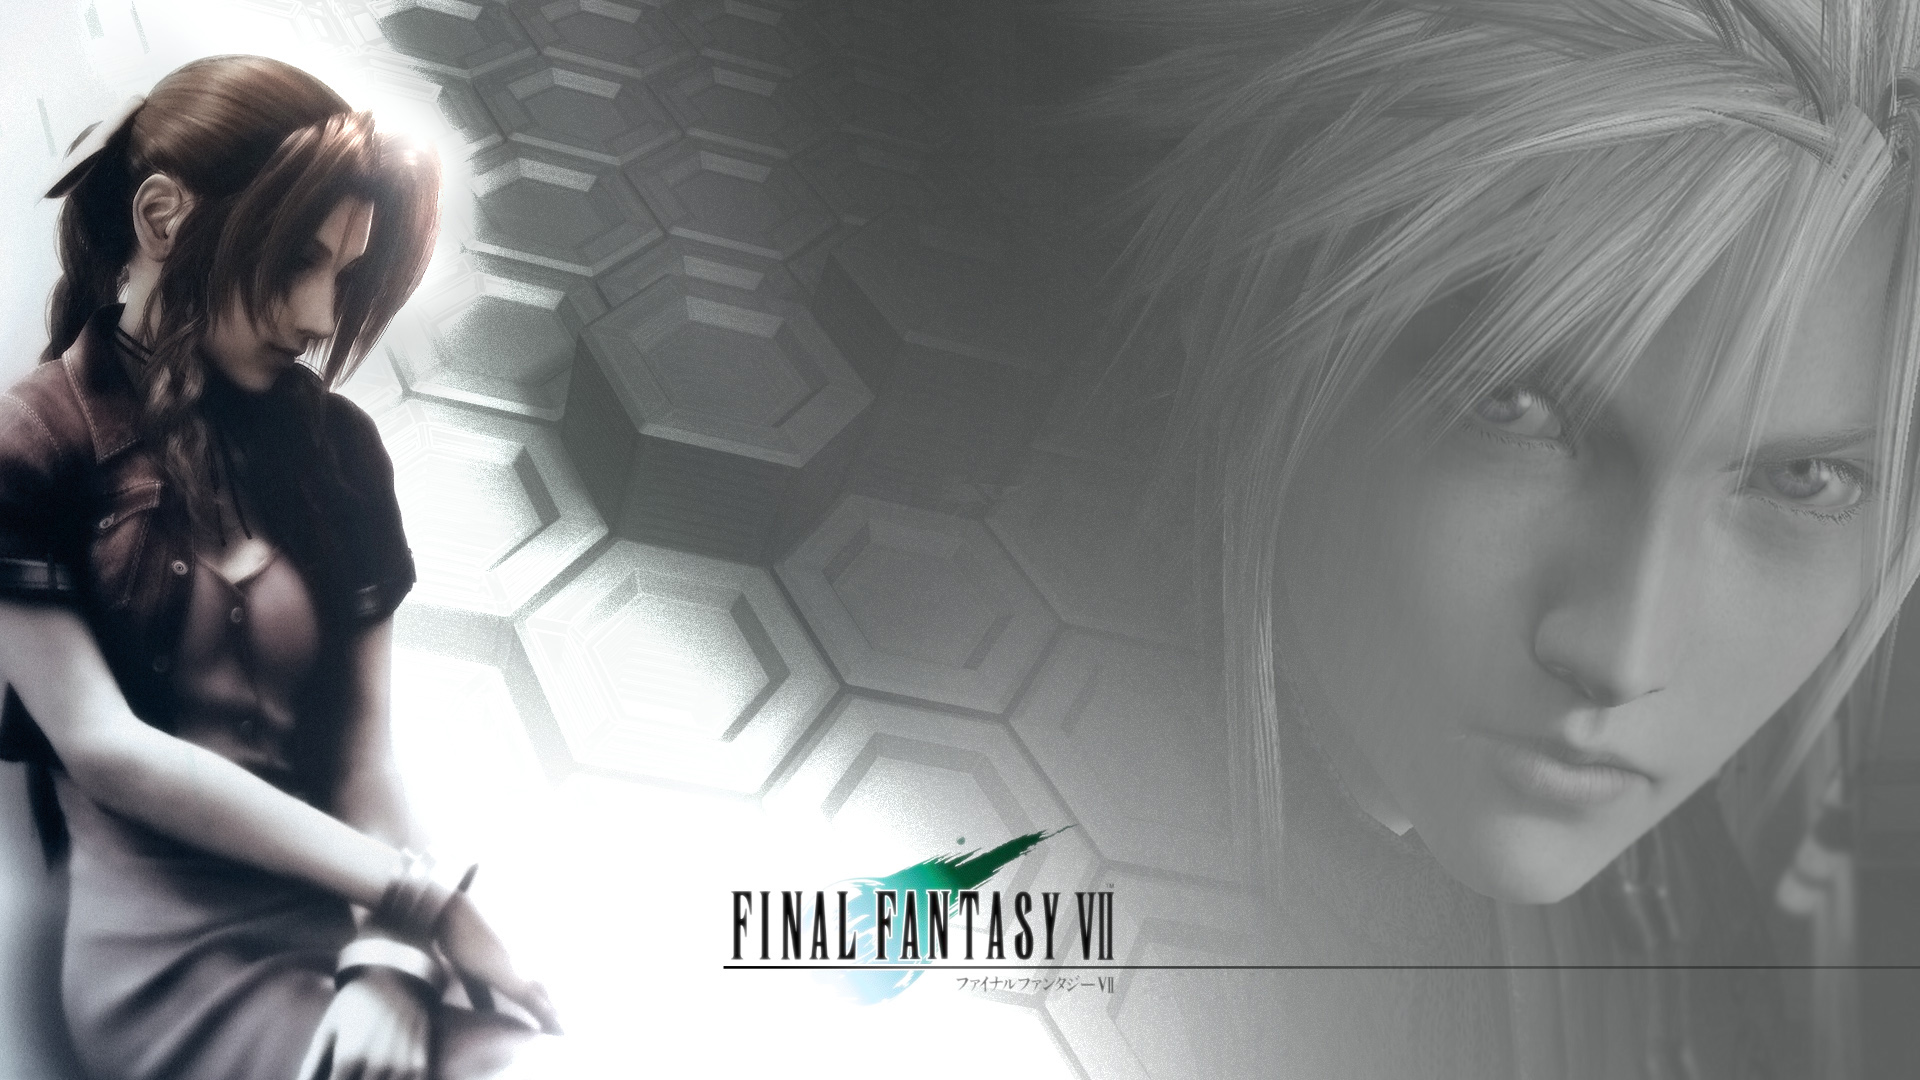 Final Fantasy 7 Wallpaper HD 78 images